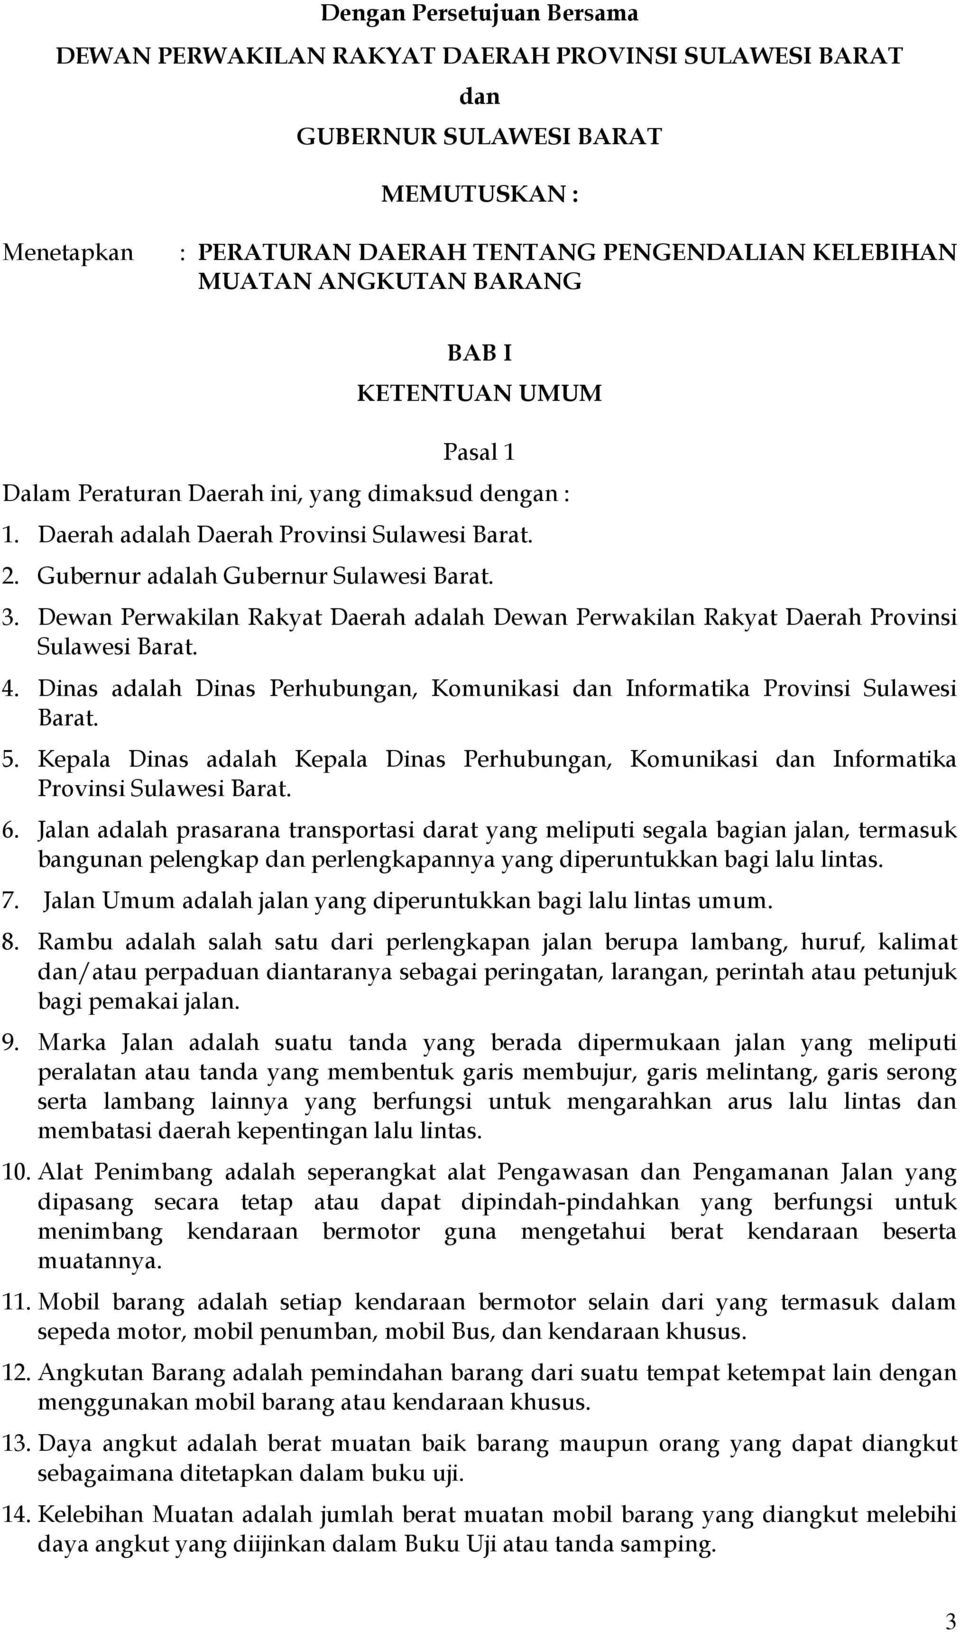 Dewan Perwakilan Rakyat Daerah adalah Dewan Perwakilan Rakyat Daerah Provinsi Sulawesi Barat. 4. Dinas adalah Dinas Perhubungan, Komunikasi dan Informatika Provinsi Sulawesi Barat. 5.